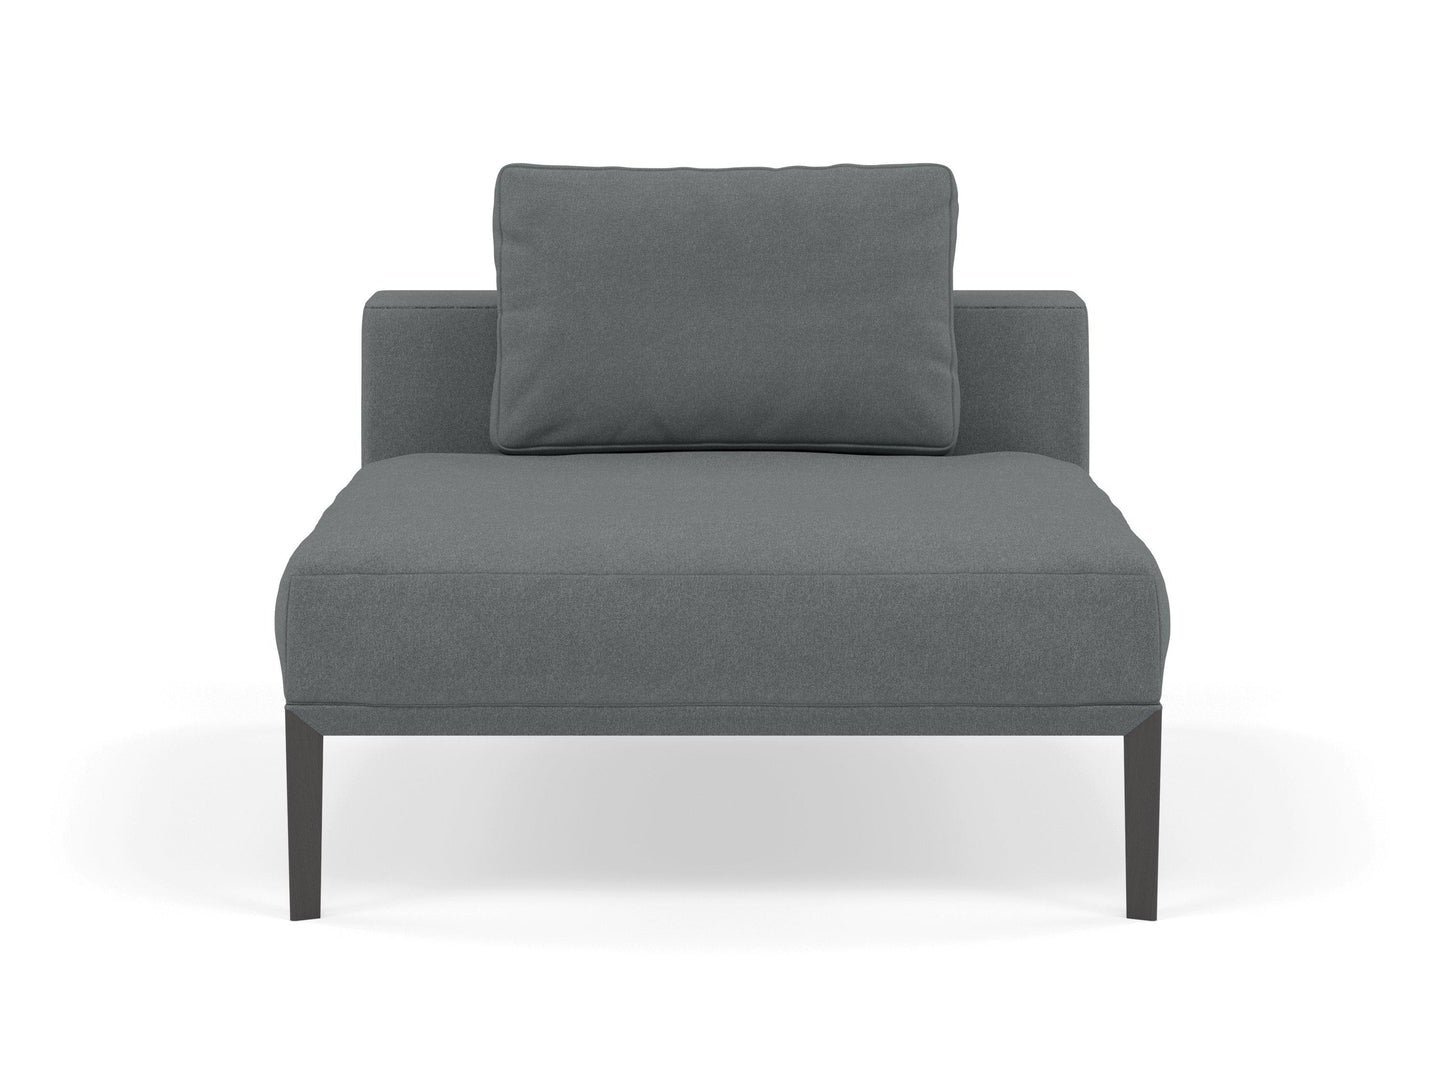 Modern Armchair 1 Seater Sofa without armrests in Sea Spray Blue Fabric-Wenge Oak-Distinct Designs (London) Ltd